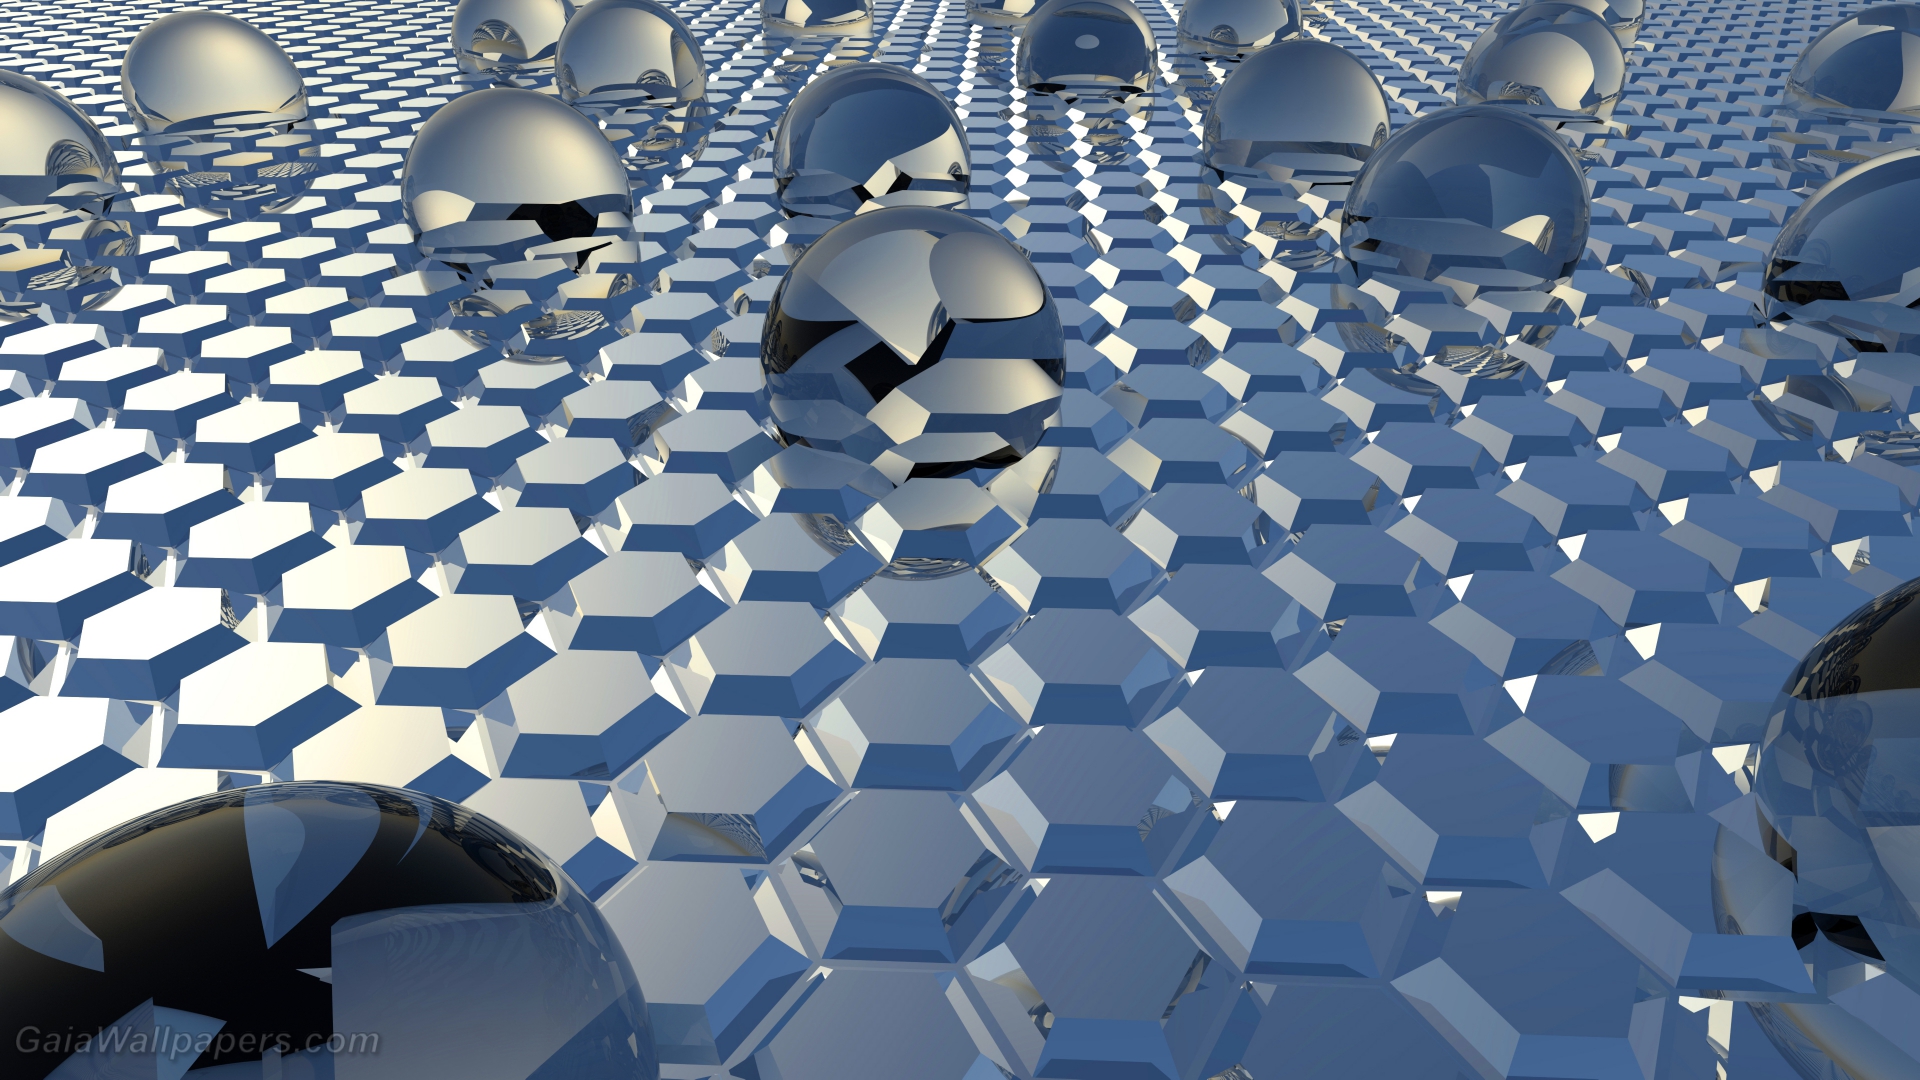 Glass spheres emerging from the hexagonal mirror - Free desktop wallpapers